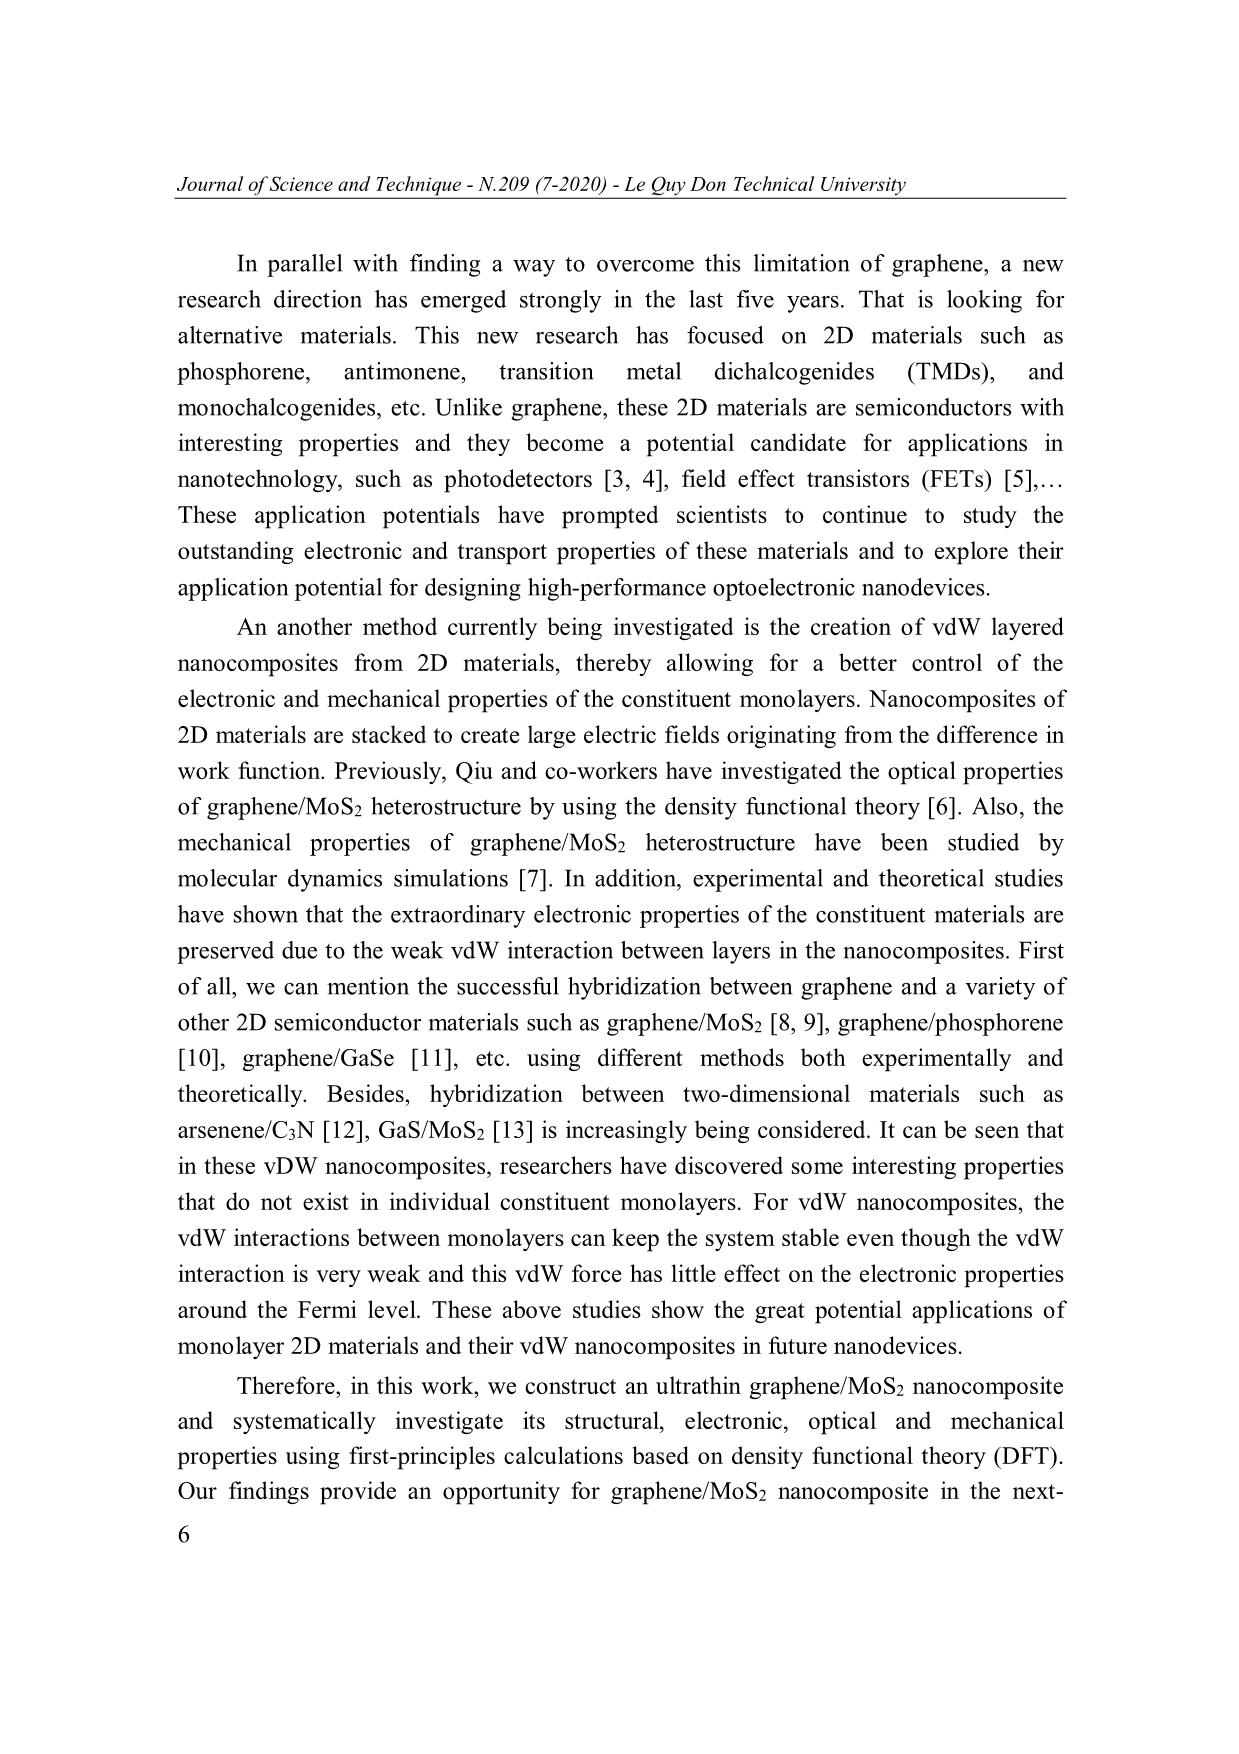 Electronic, optical and mechanical properties of graphene/MoS₂ nanocomposite trang 2